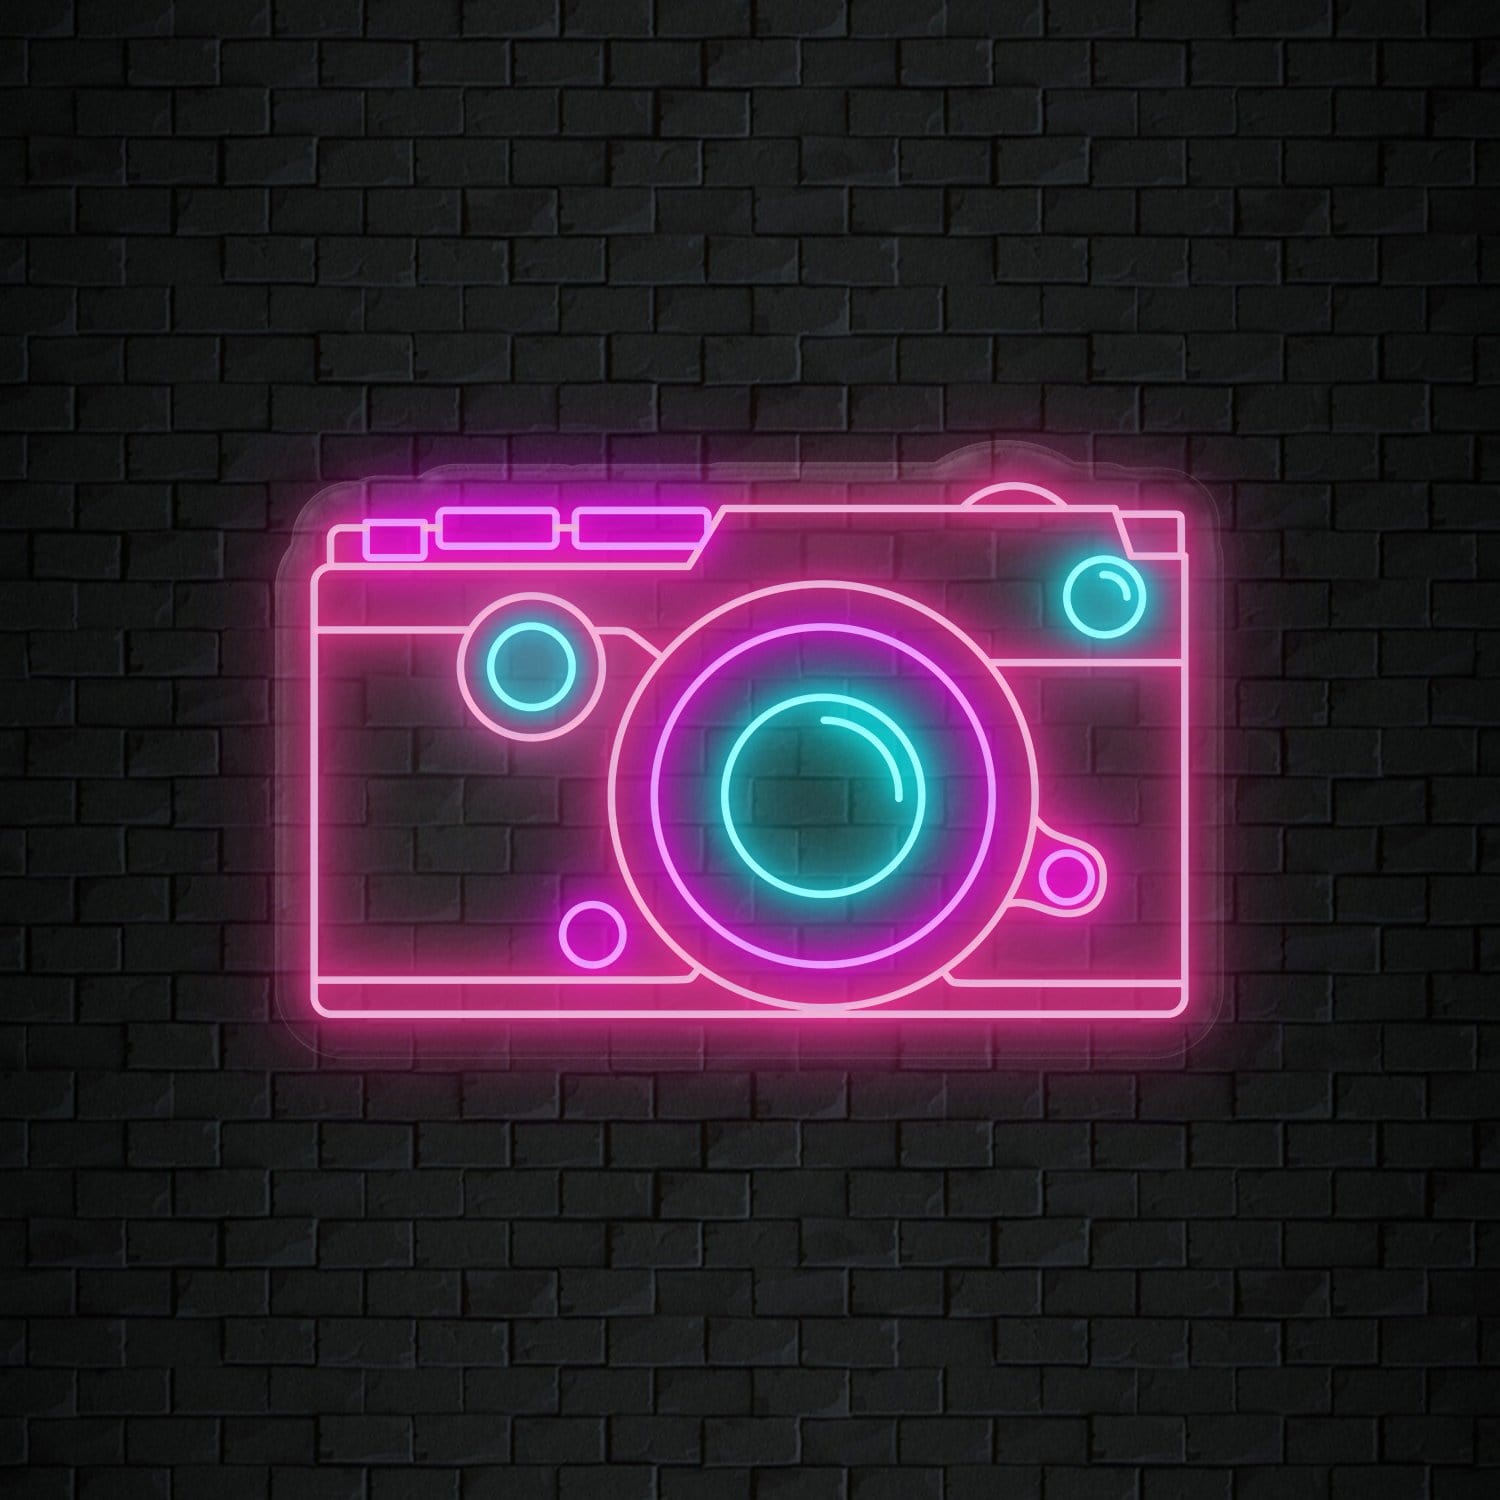 "Fotografie Kamera" LED Neonschild Sign Schriftzug - NEONEVERGLOW